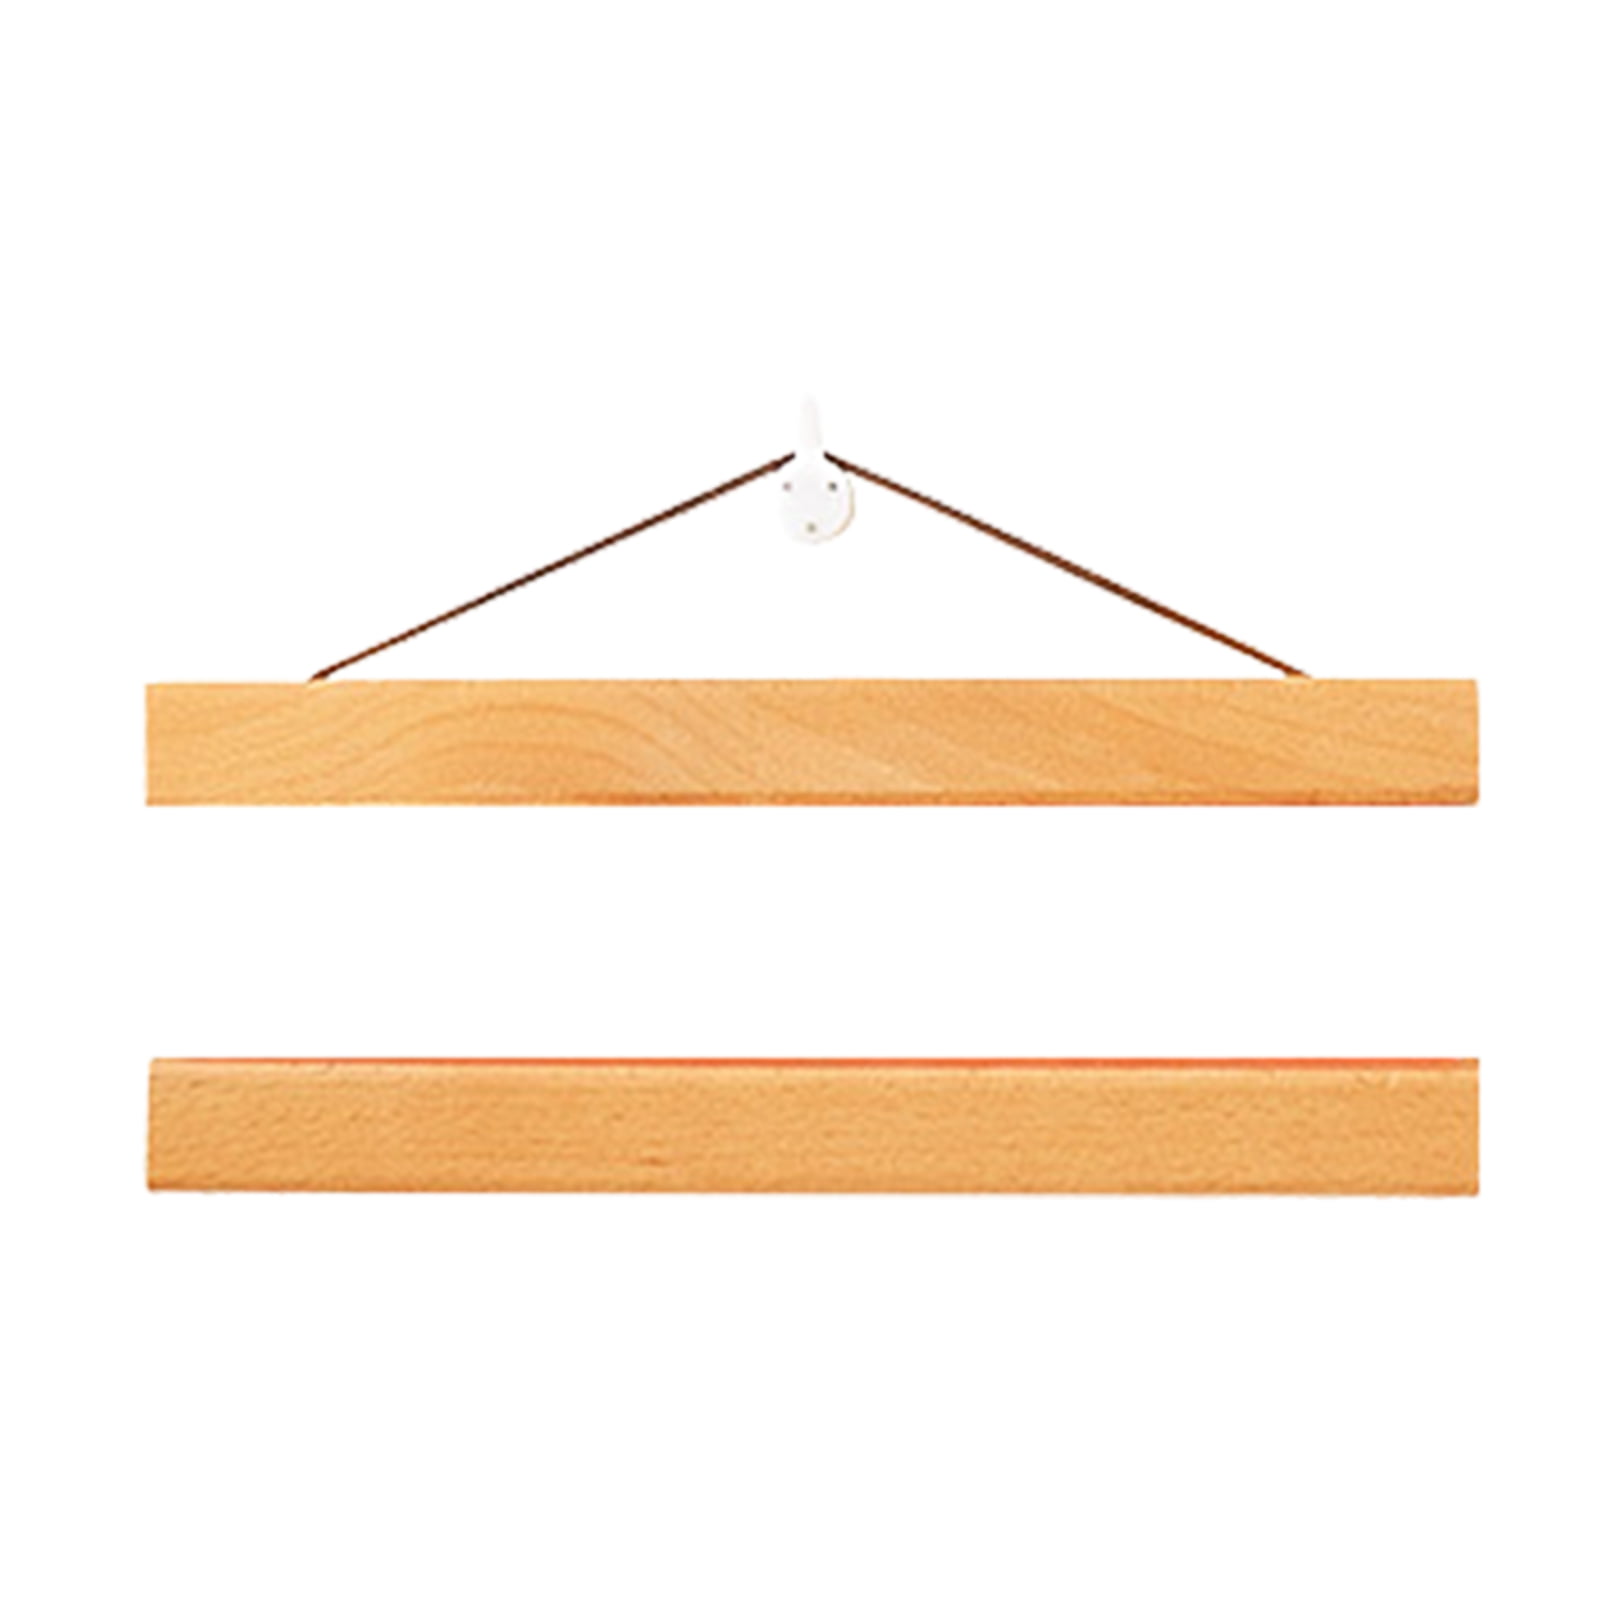 BROWN WALNUT Wooden Poster hanger gripper wood holder hanging window display A0 